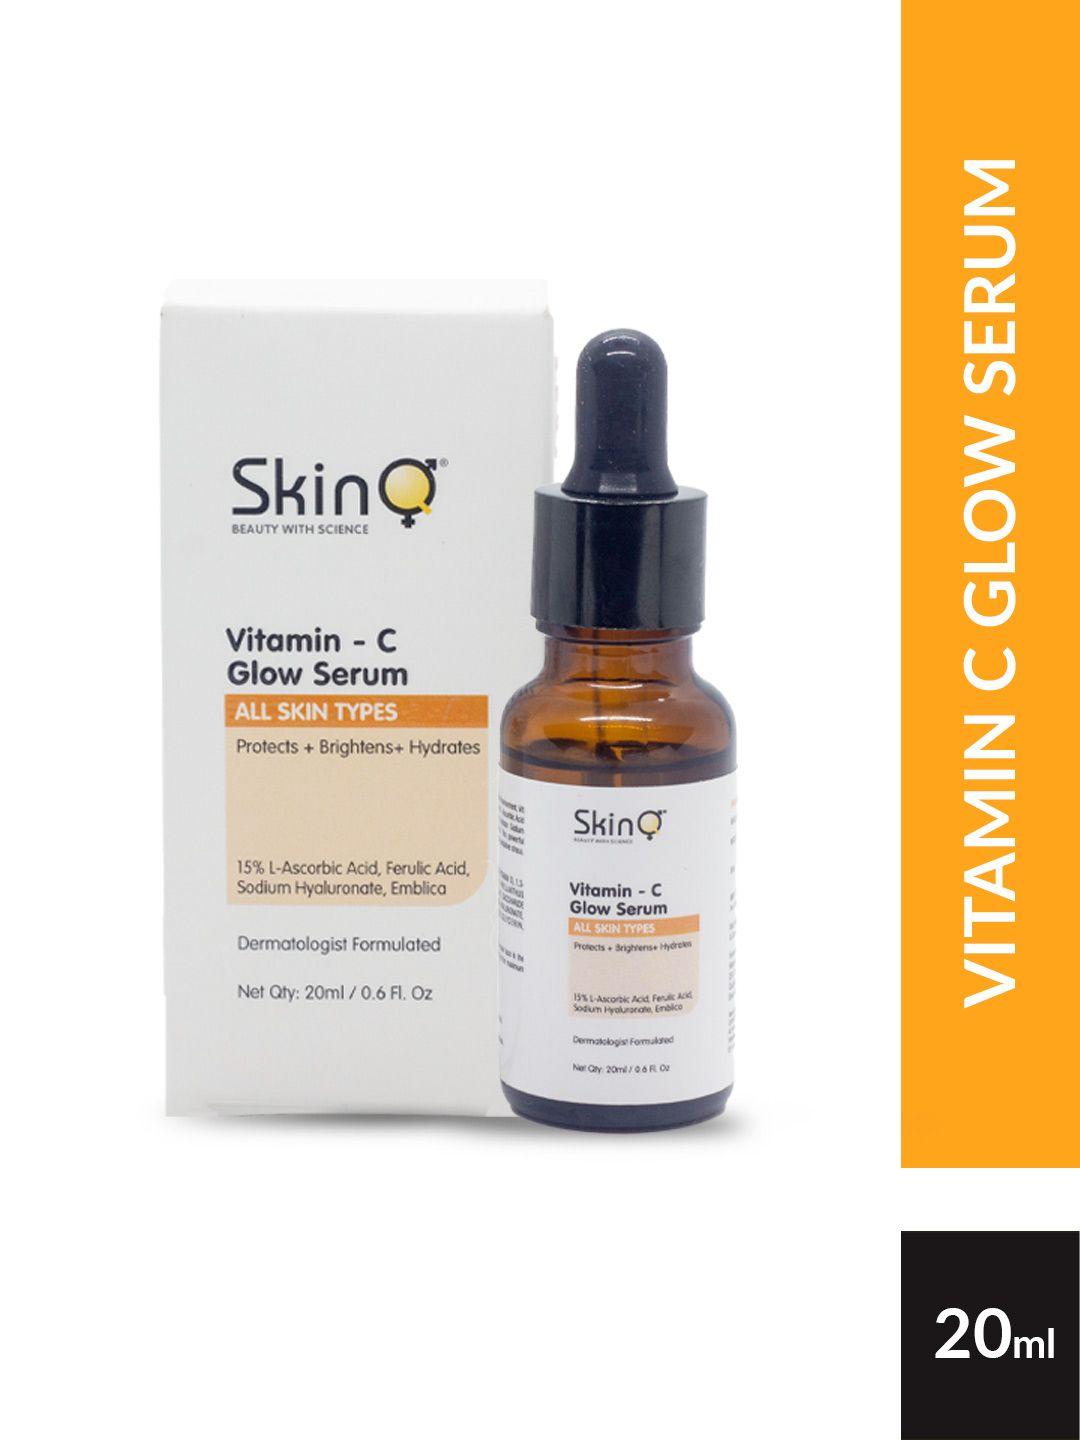 skinq-unisex-vitamin-c-glow-serum-20ml